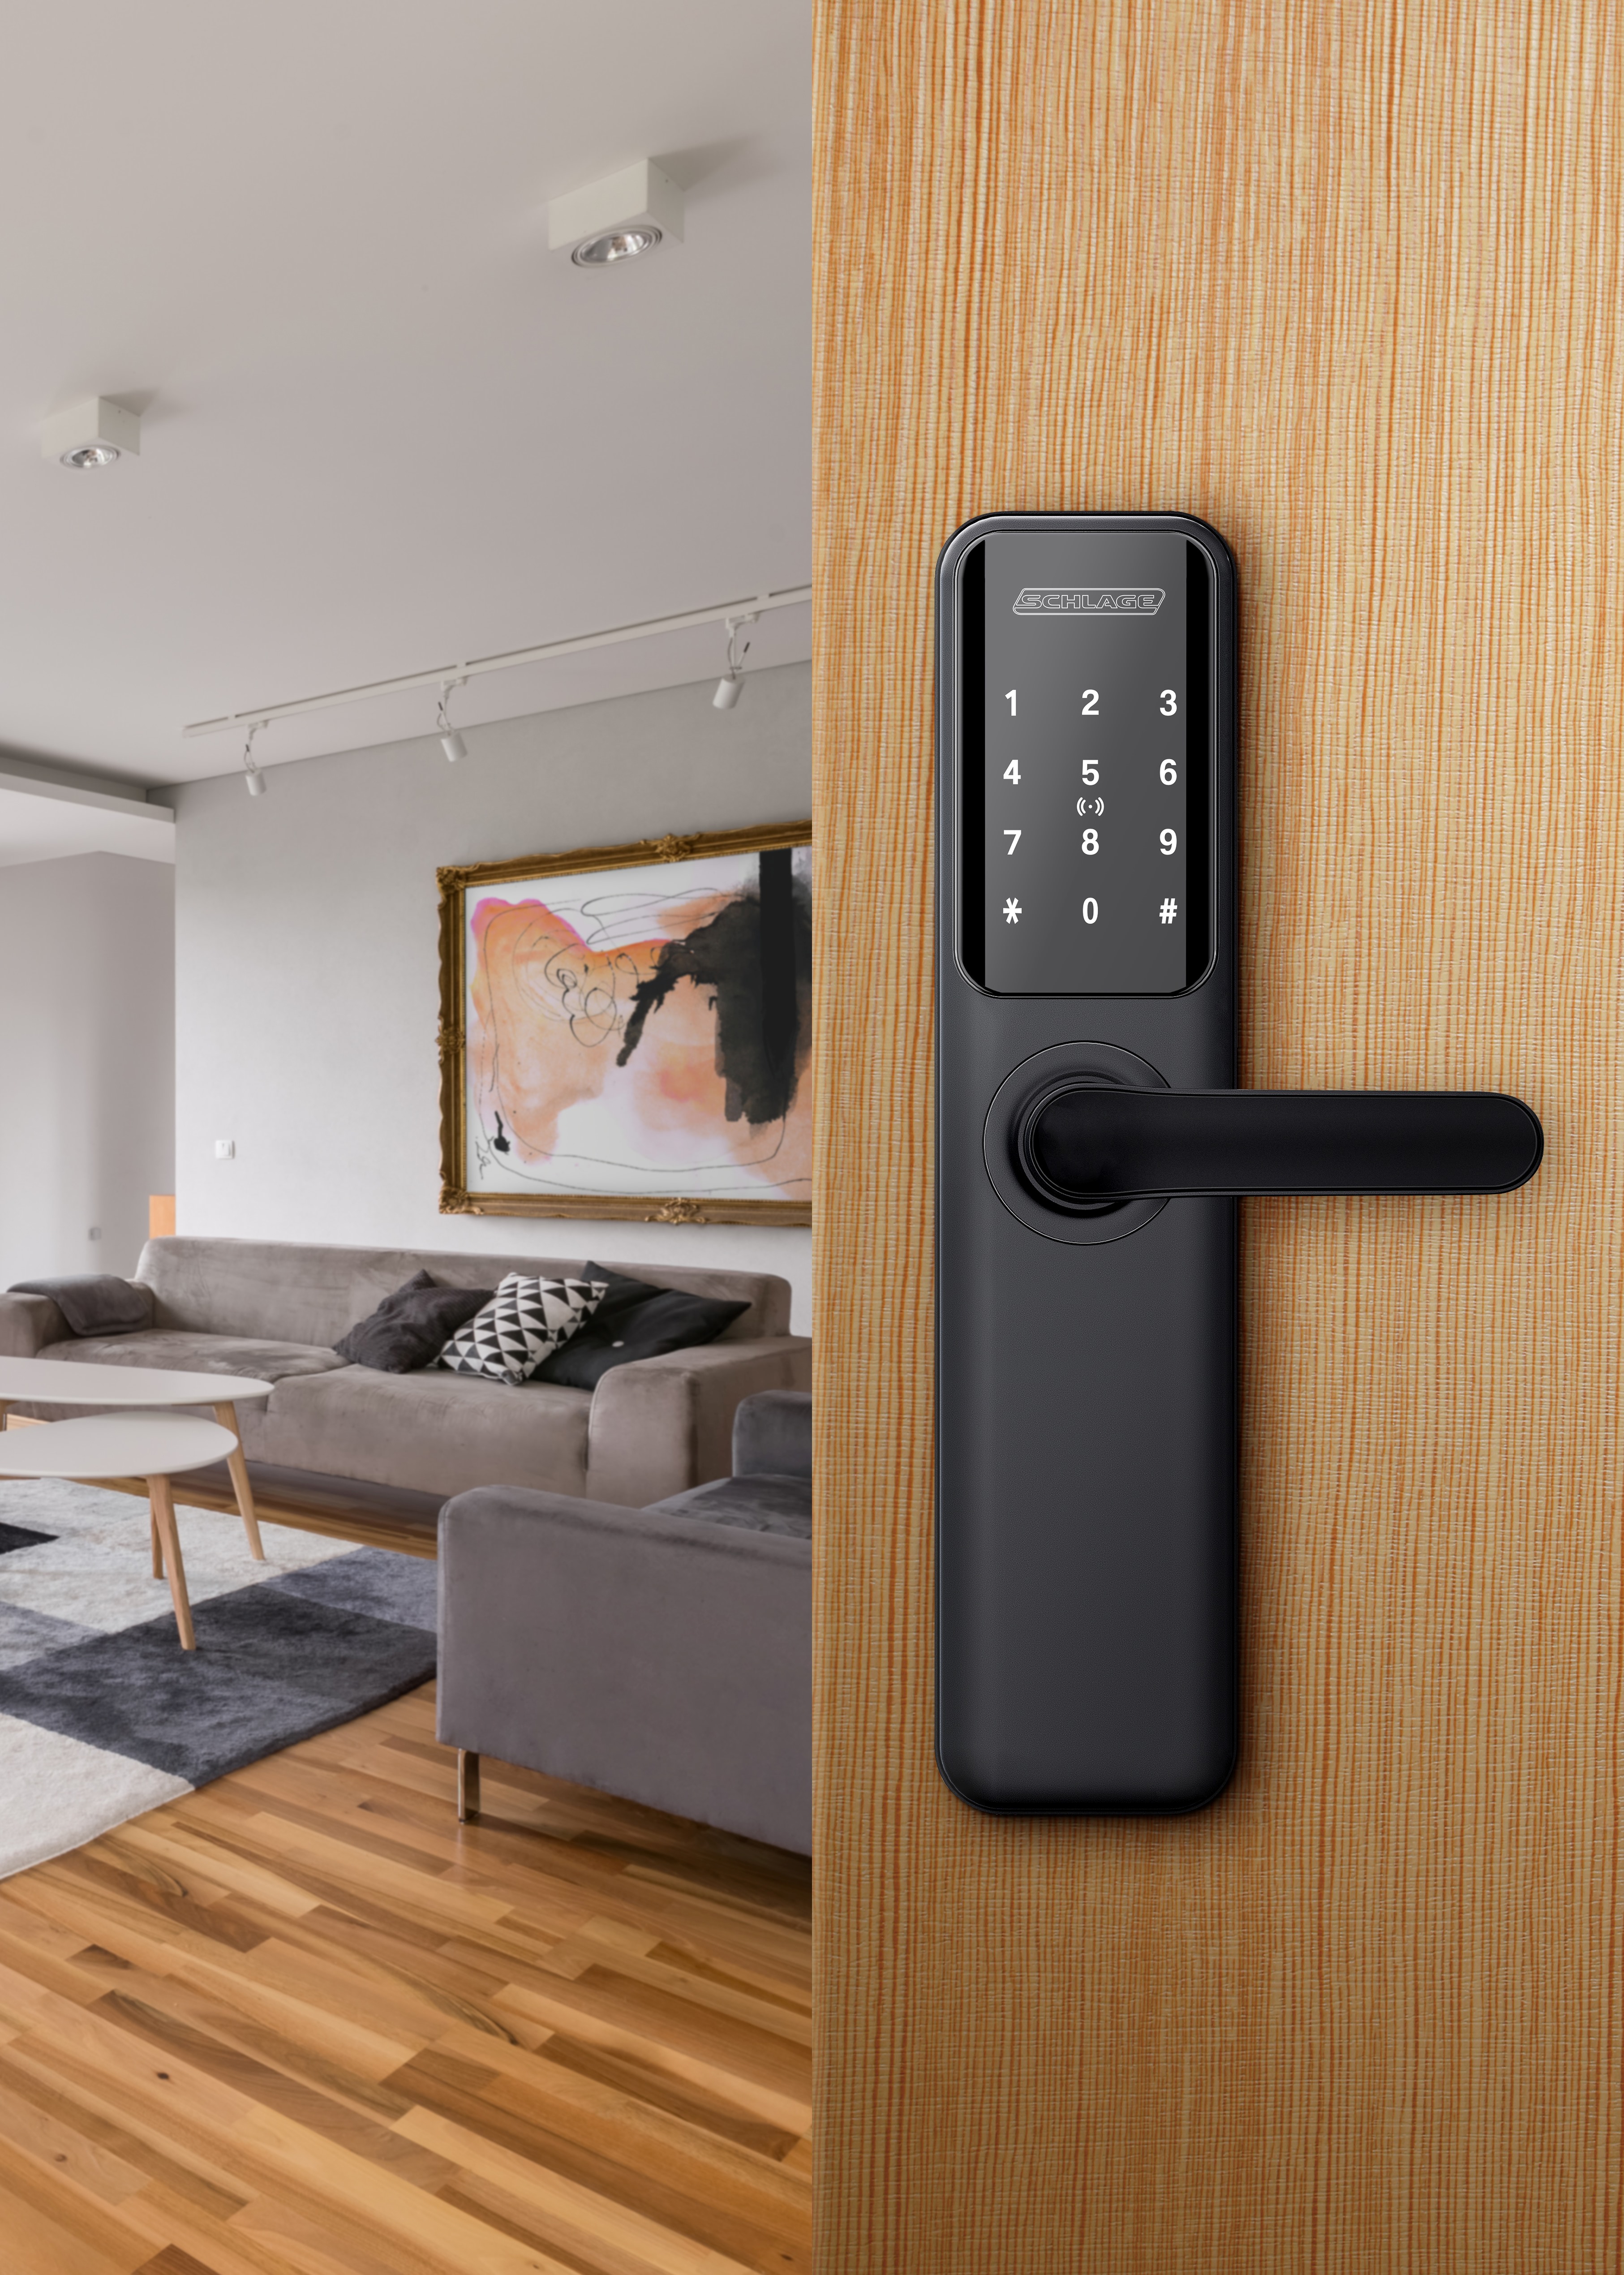 Smart Home Lock Design Solutions